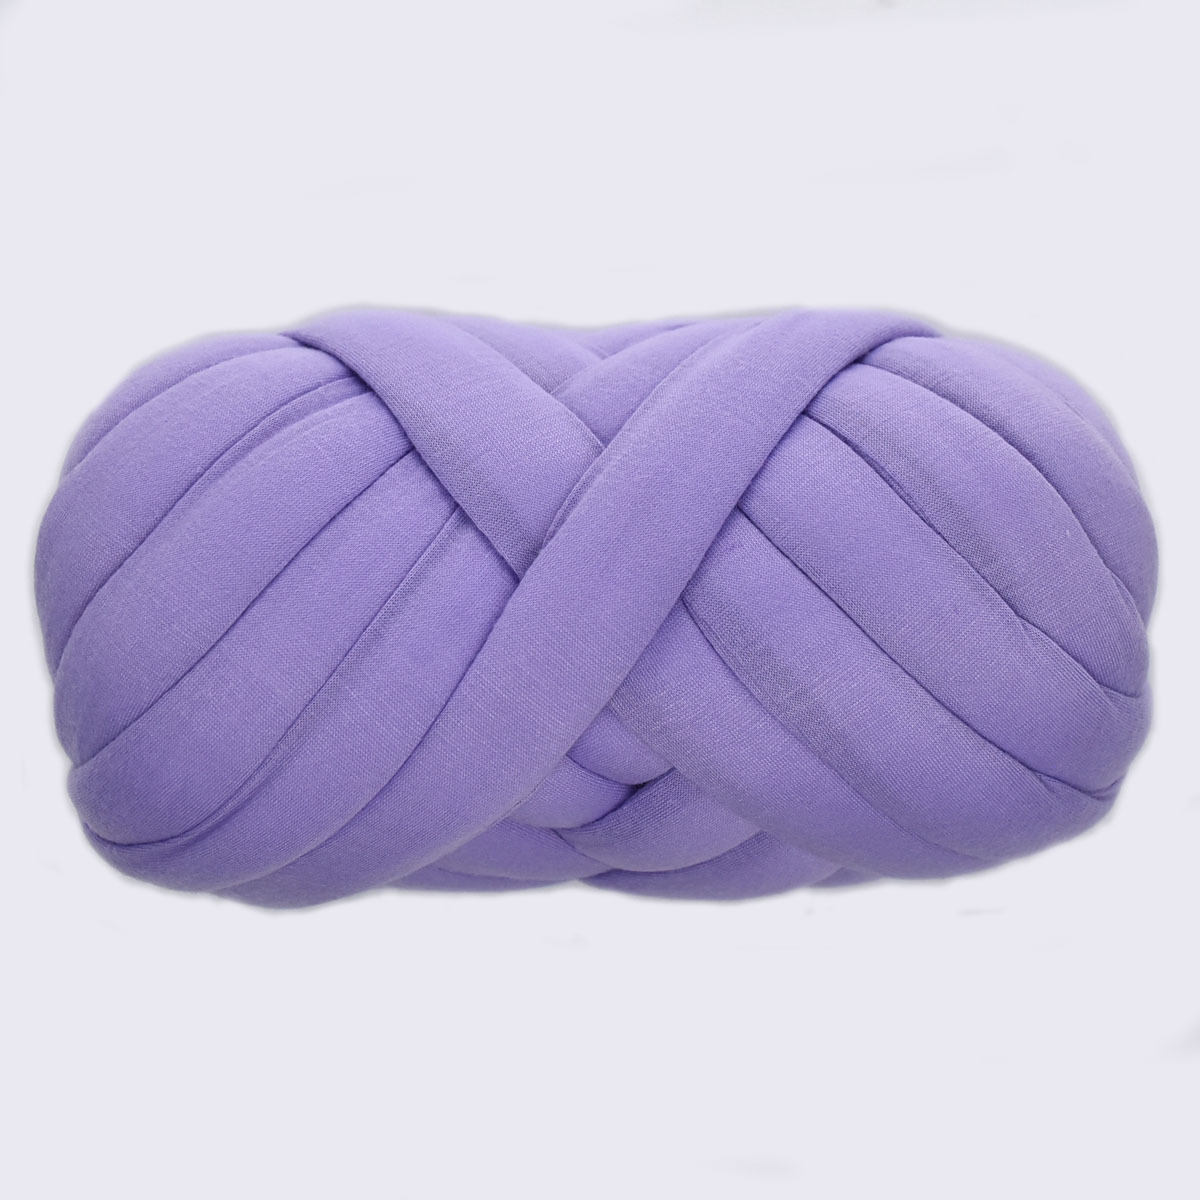 Super Chunky Wool Yarn Bulky Arm Knitting Wool Roving Crocheting Yarn for  Chunky Braided Knot Throw Blanket DIY, 0.55 lbs / 49 Yard, Light Gray 